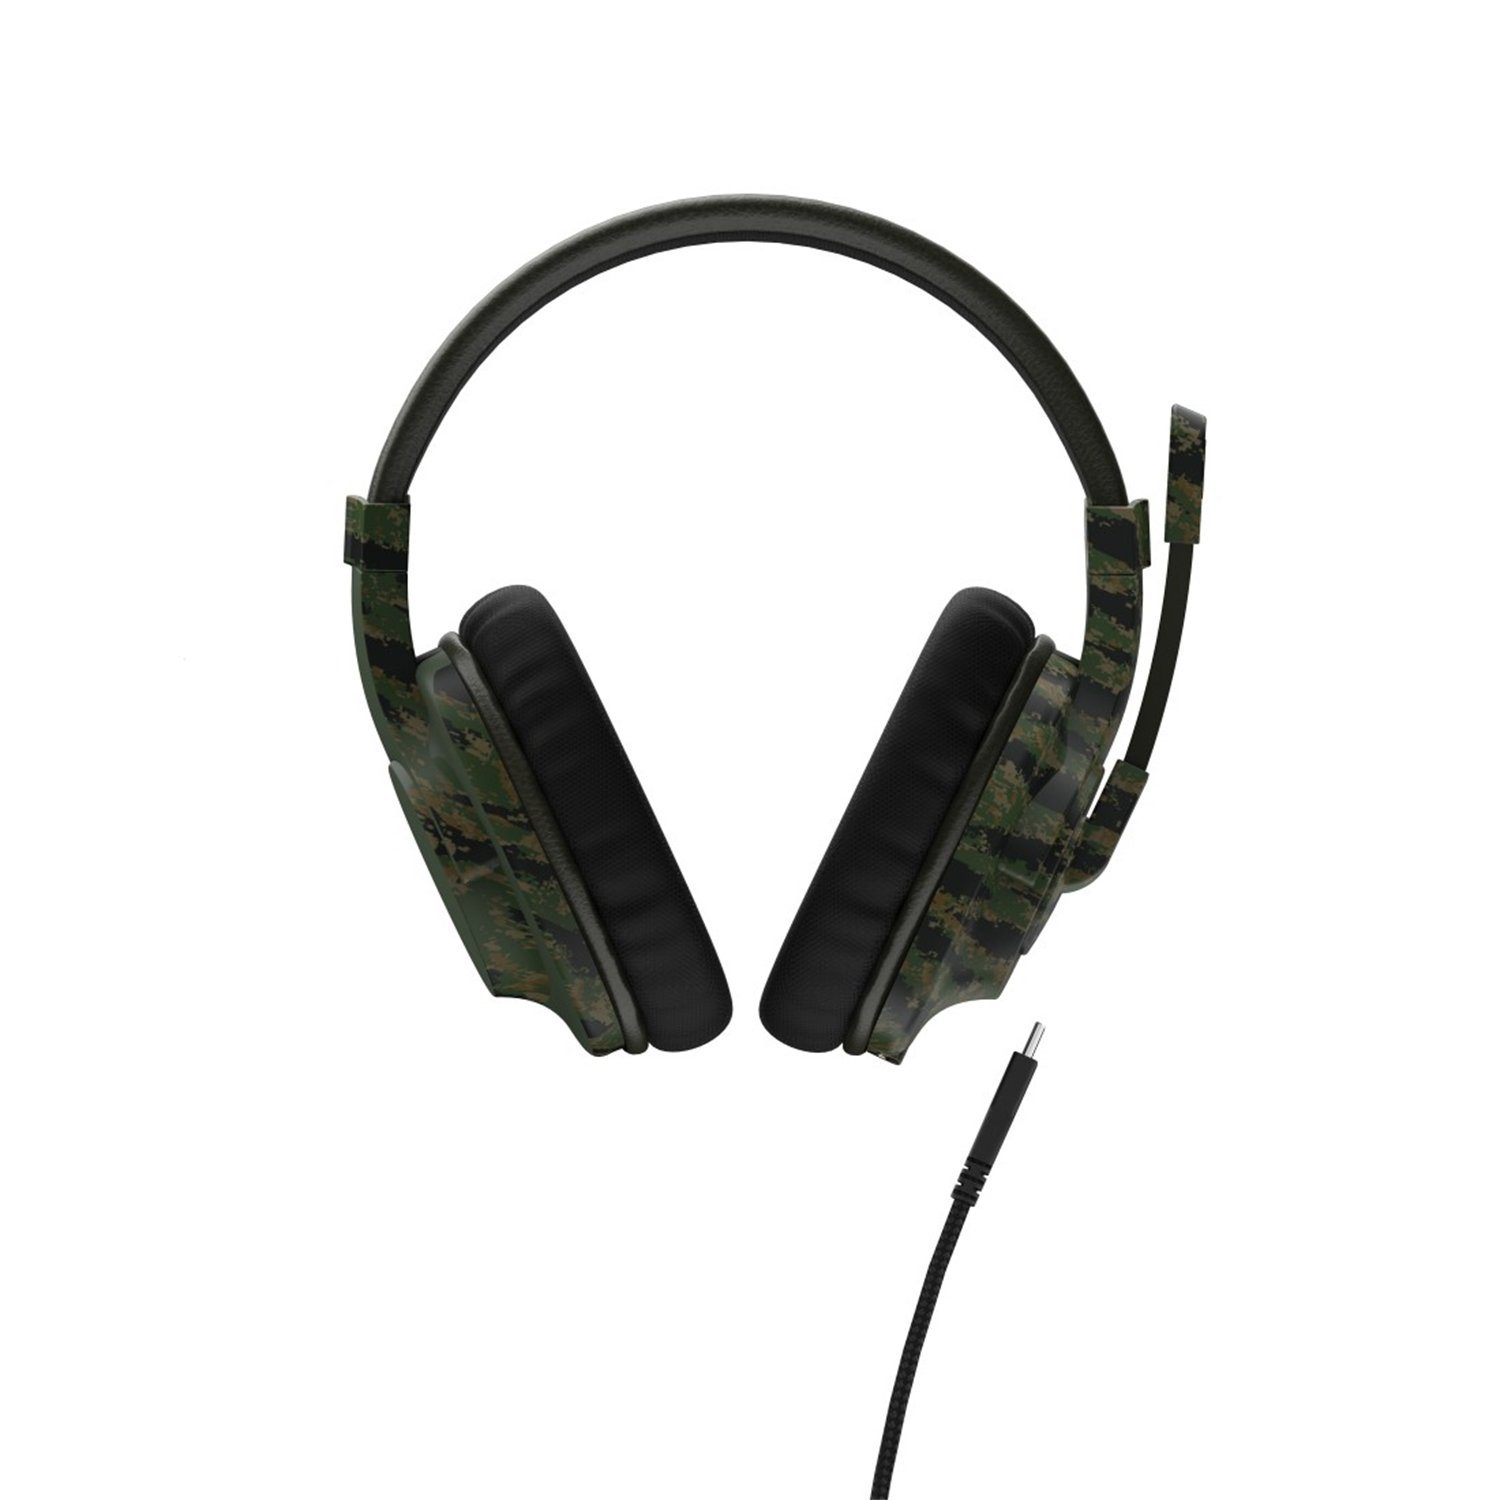 uRage SoundZ 330 V2, Camouflage Gaming-Headset (Lautstärkeregler)